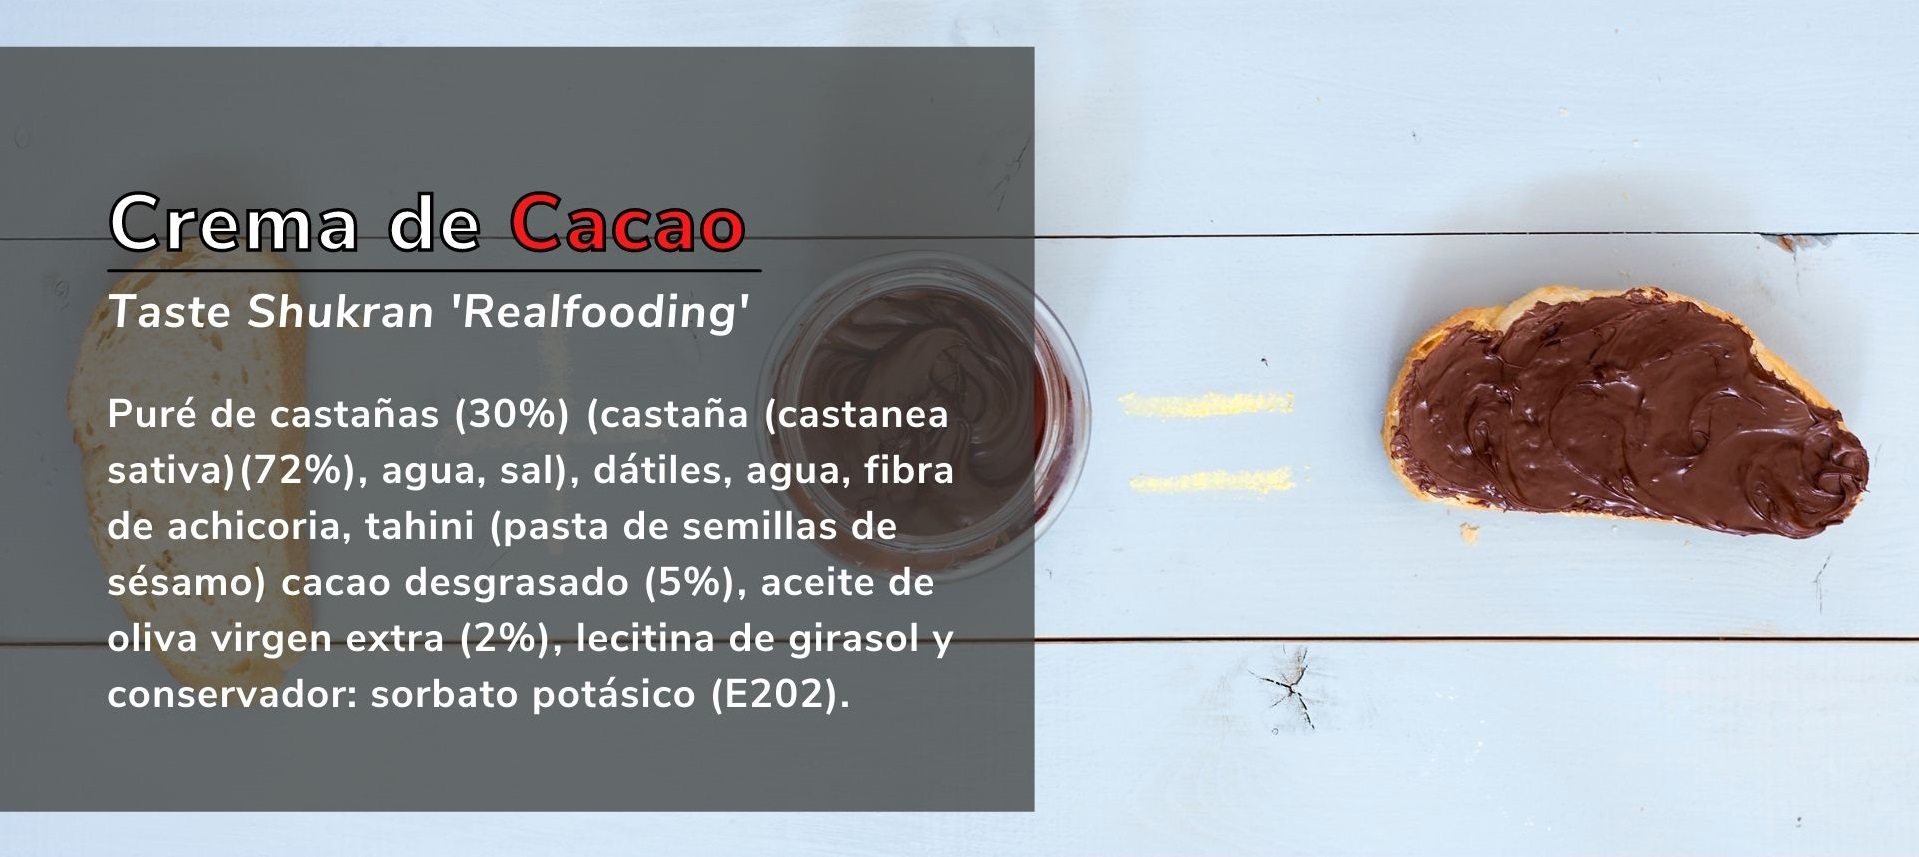 Crema-de-cacao-Realfooding-Review-Ingredientes